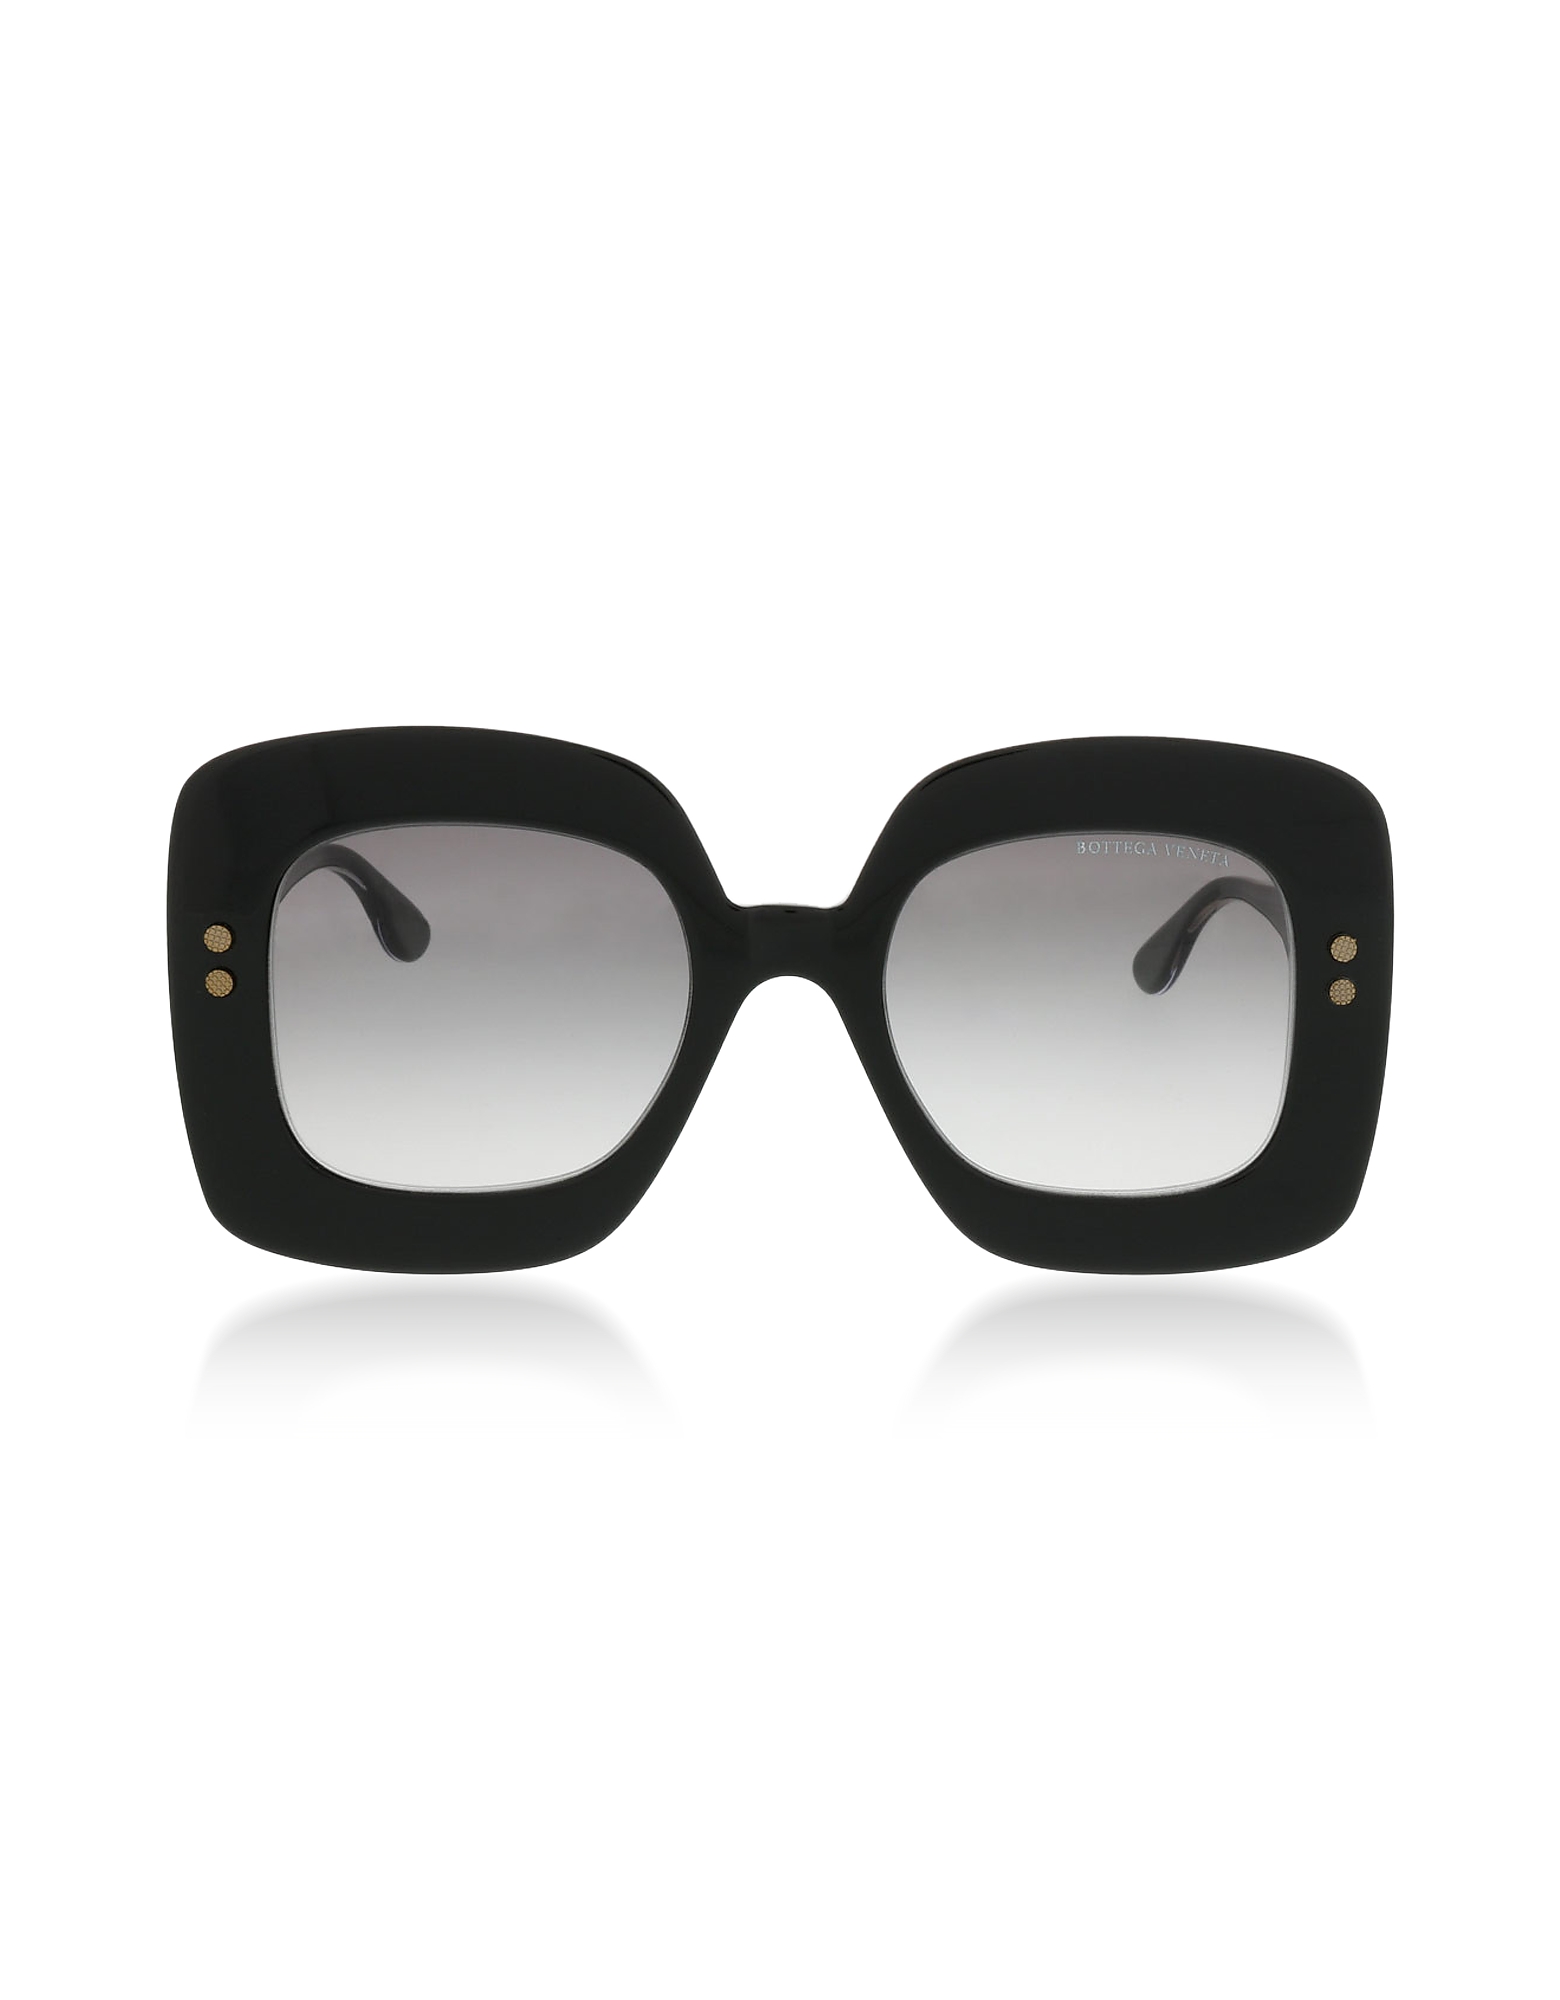 Bottega Veneta Sunglasses Black Square Acetate Frame Women's Oversized Sunglasses